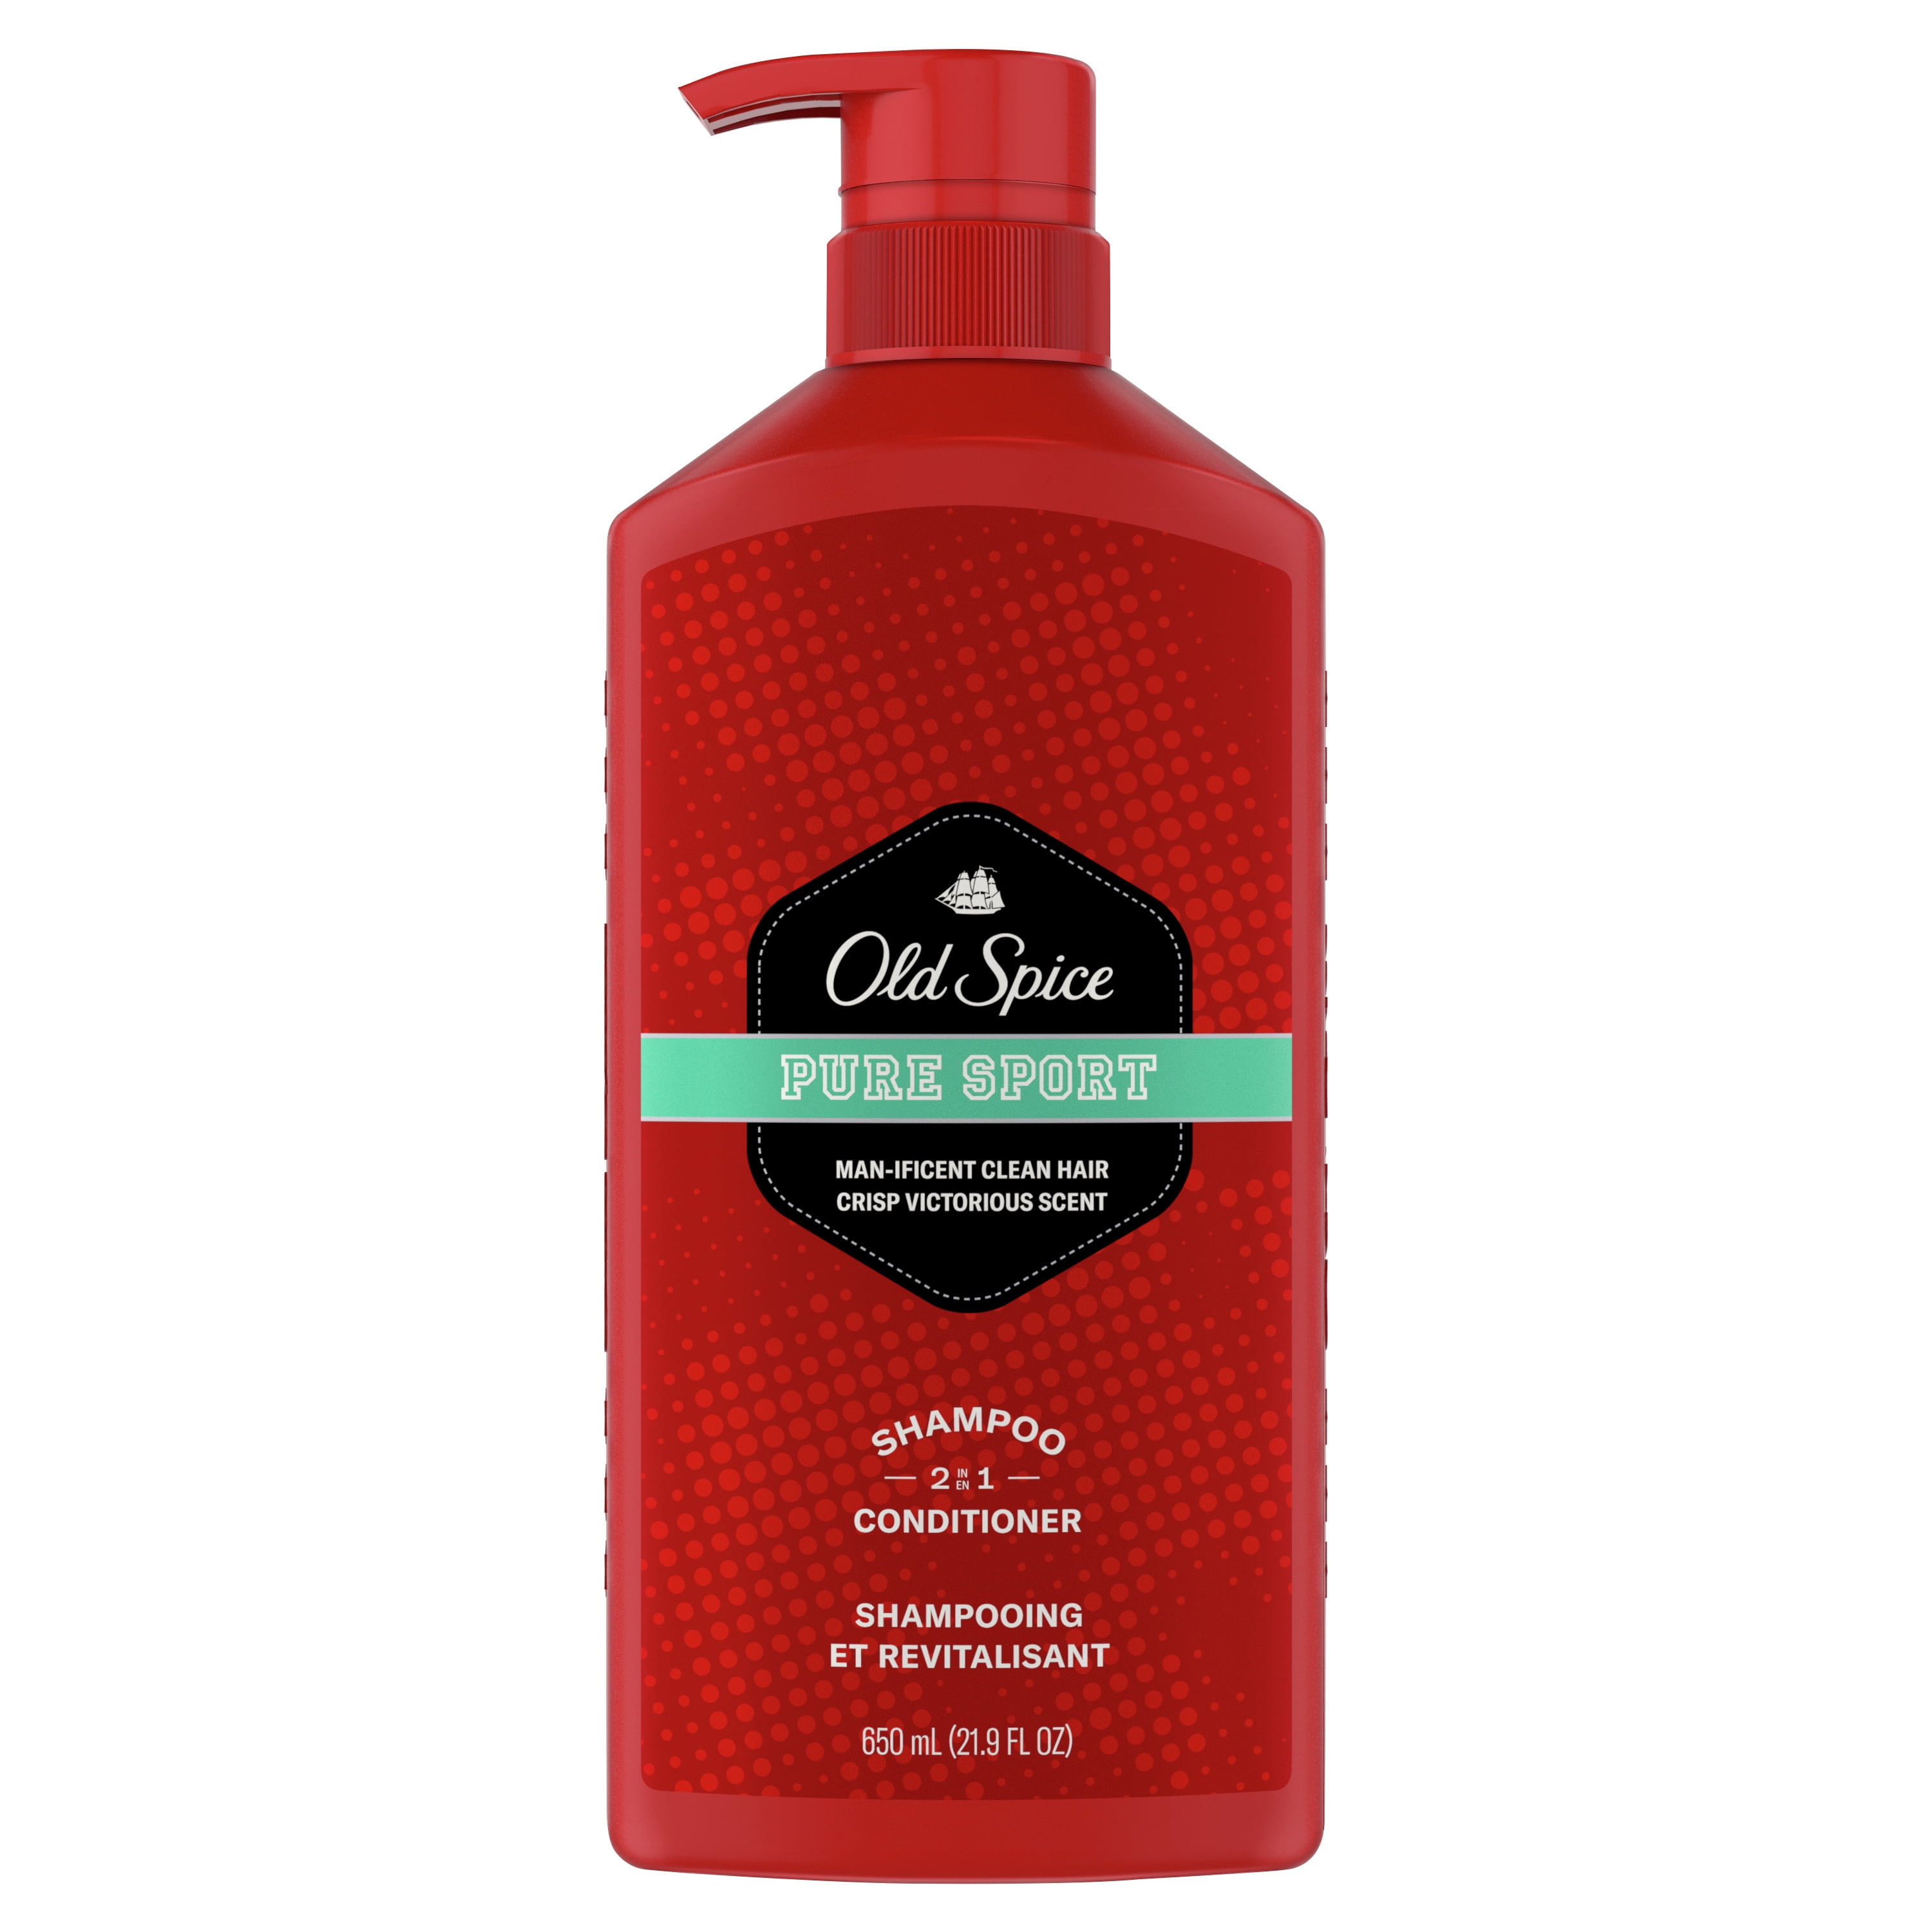 Old Spice Mens 2 in 1 Shampoo and Conditioner, Pure Sport, 22 fl oz